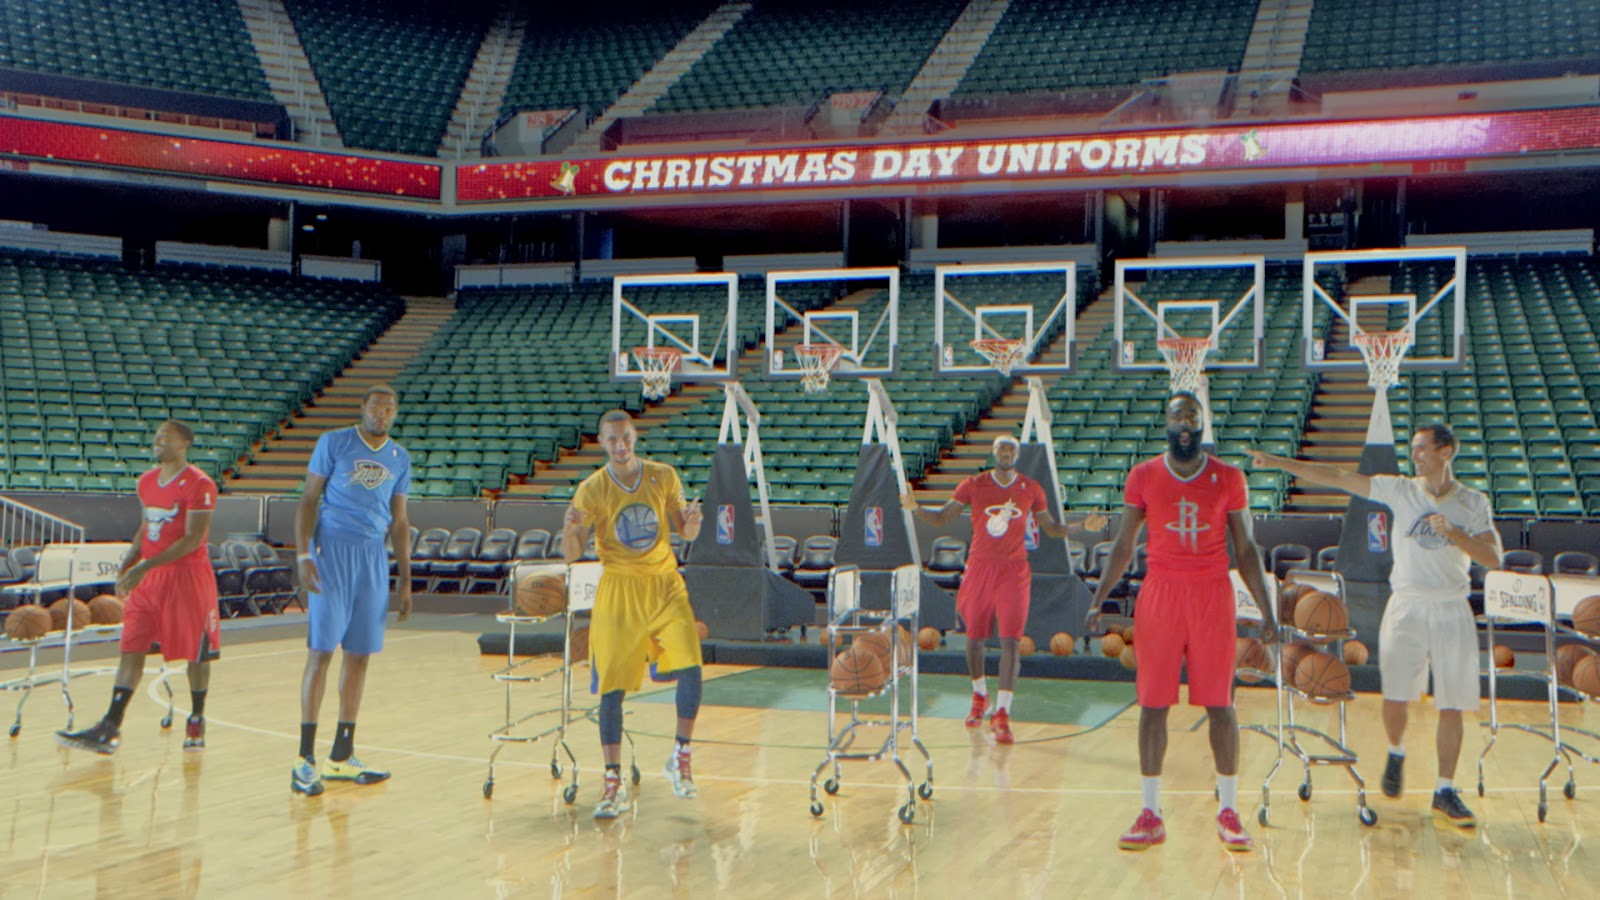 adidas, Stance and the NBA Unveil Uniforms for 2015 NBA Christmas